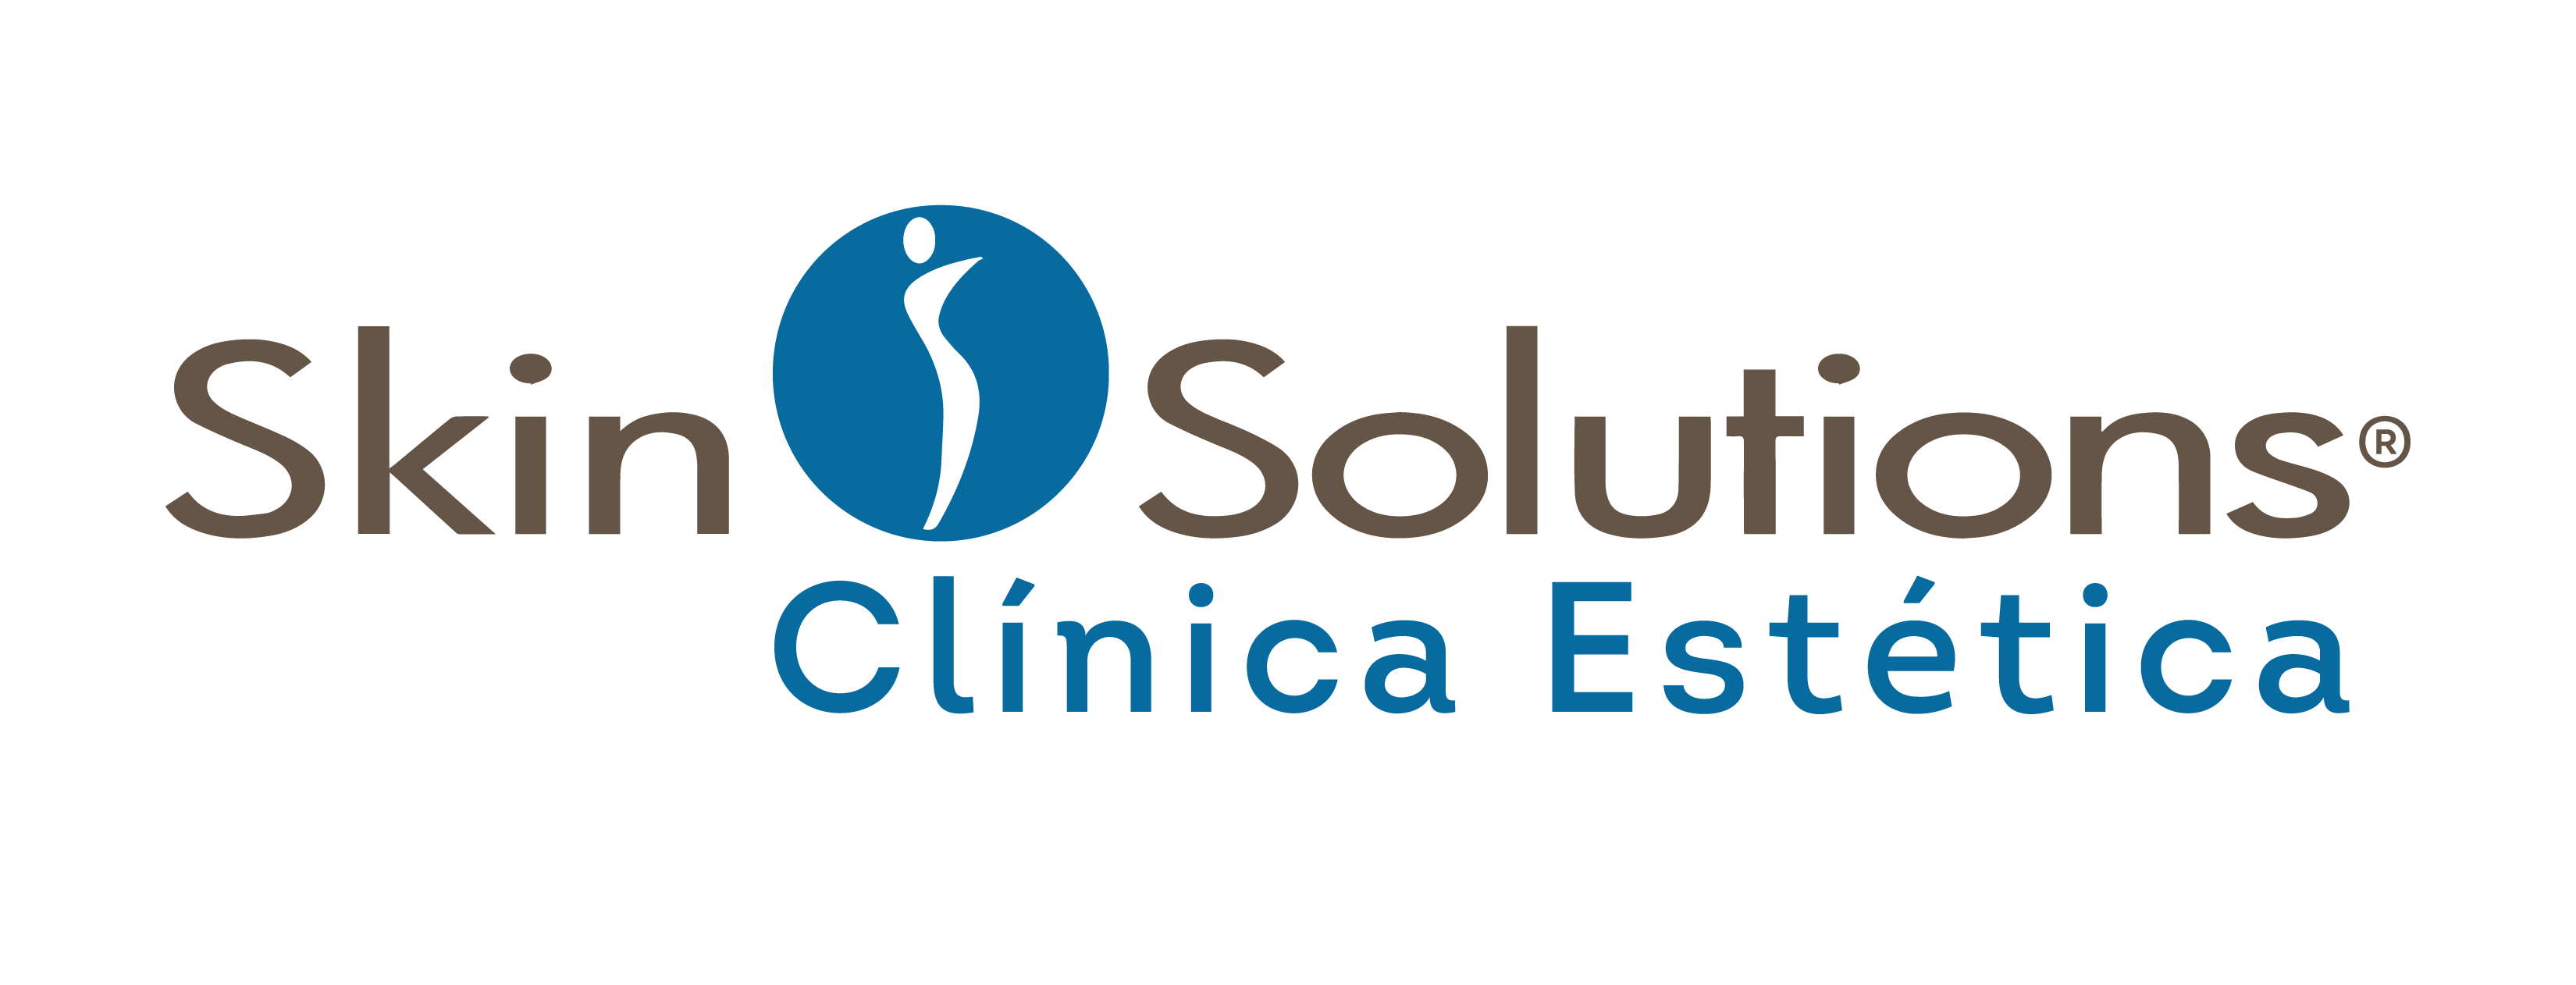 Skin Solutions Logo-01